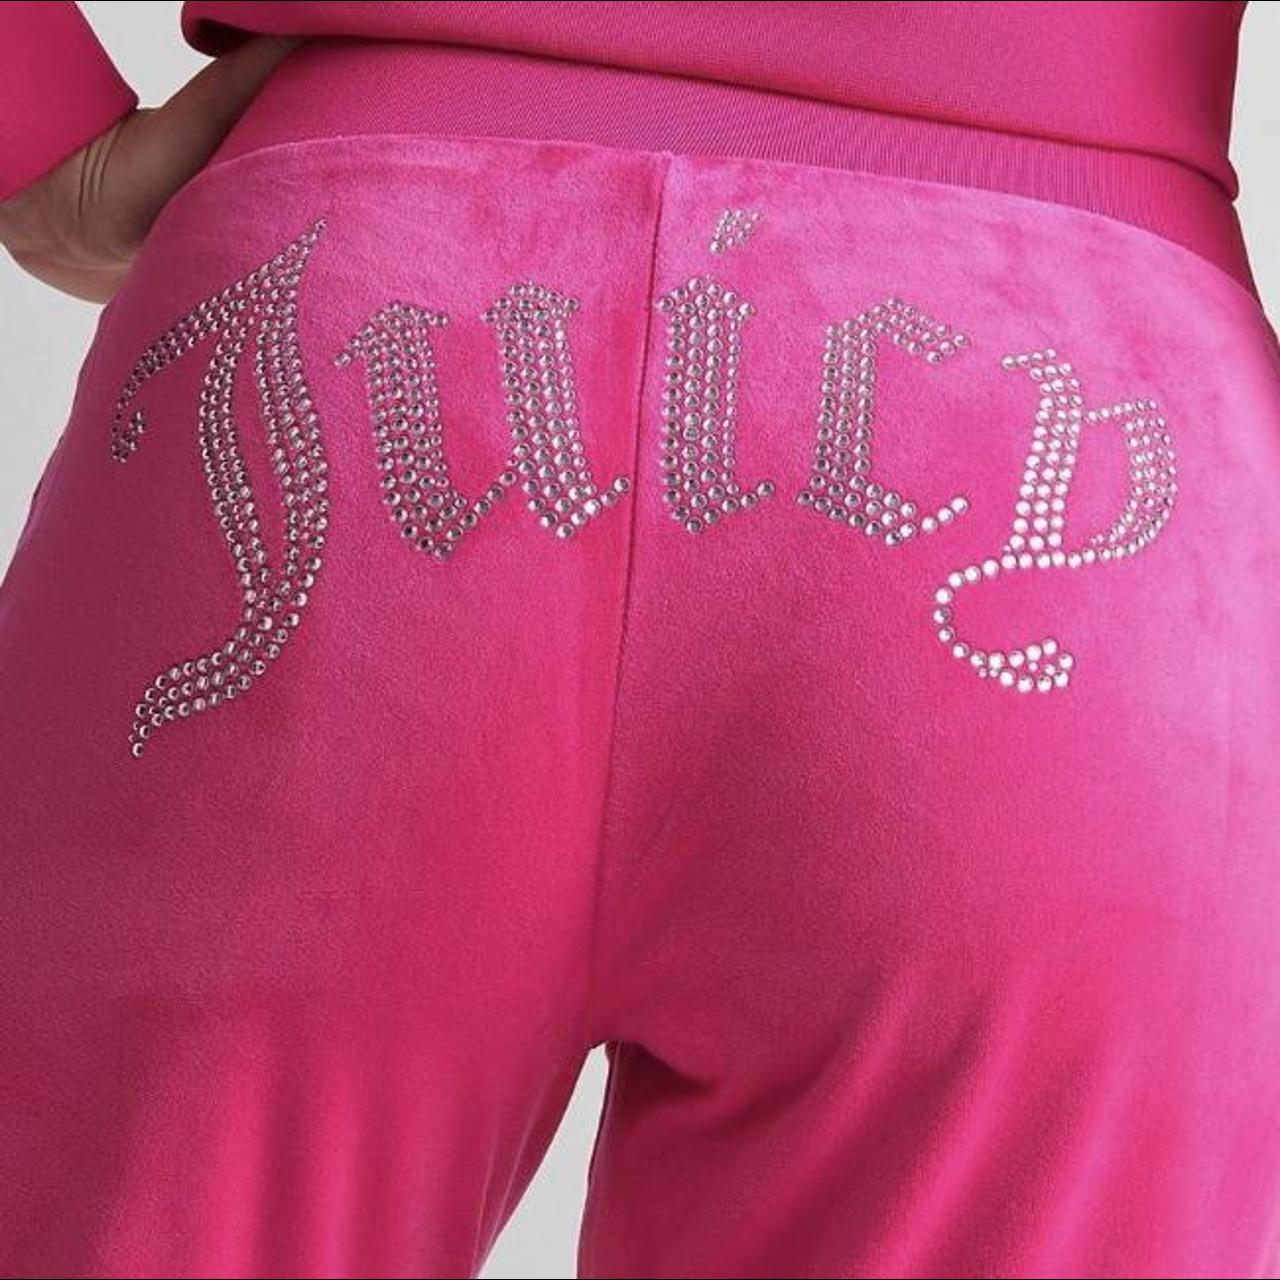 Juicy Couture Women's Leggings